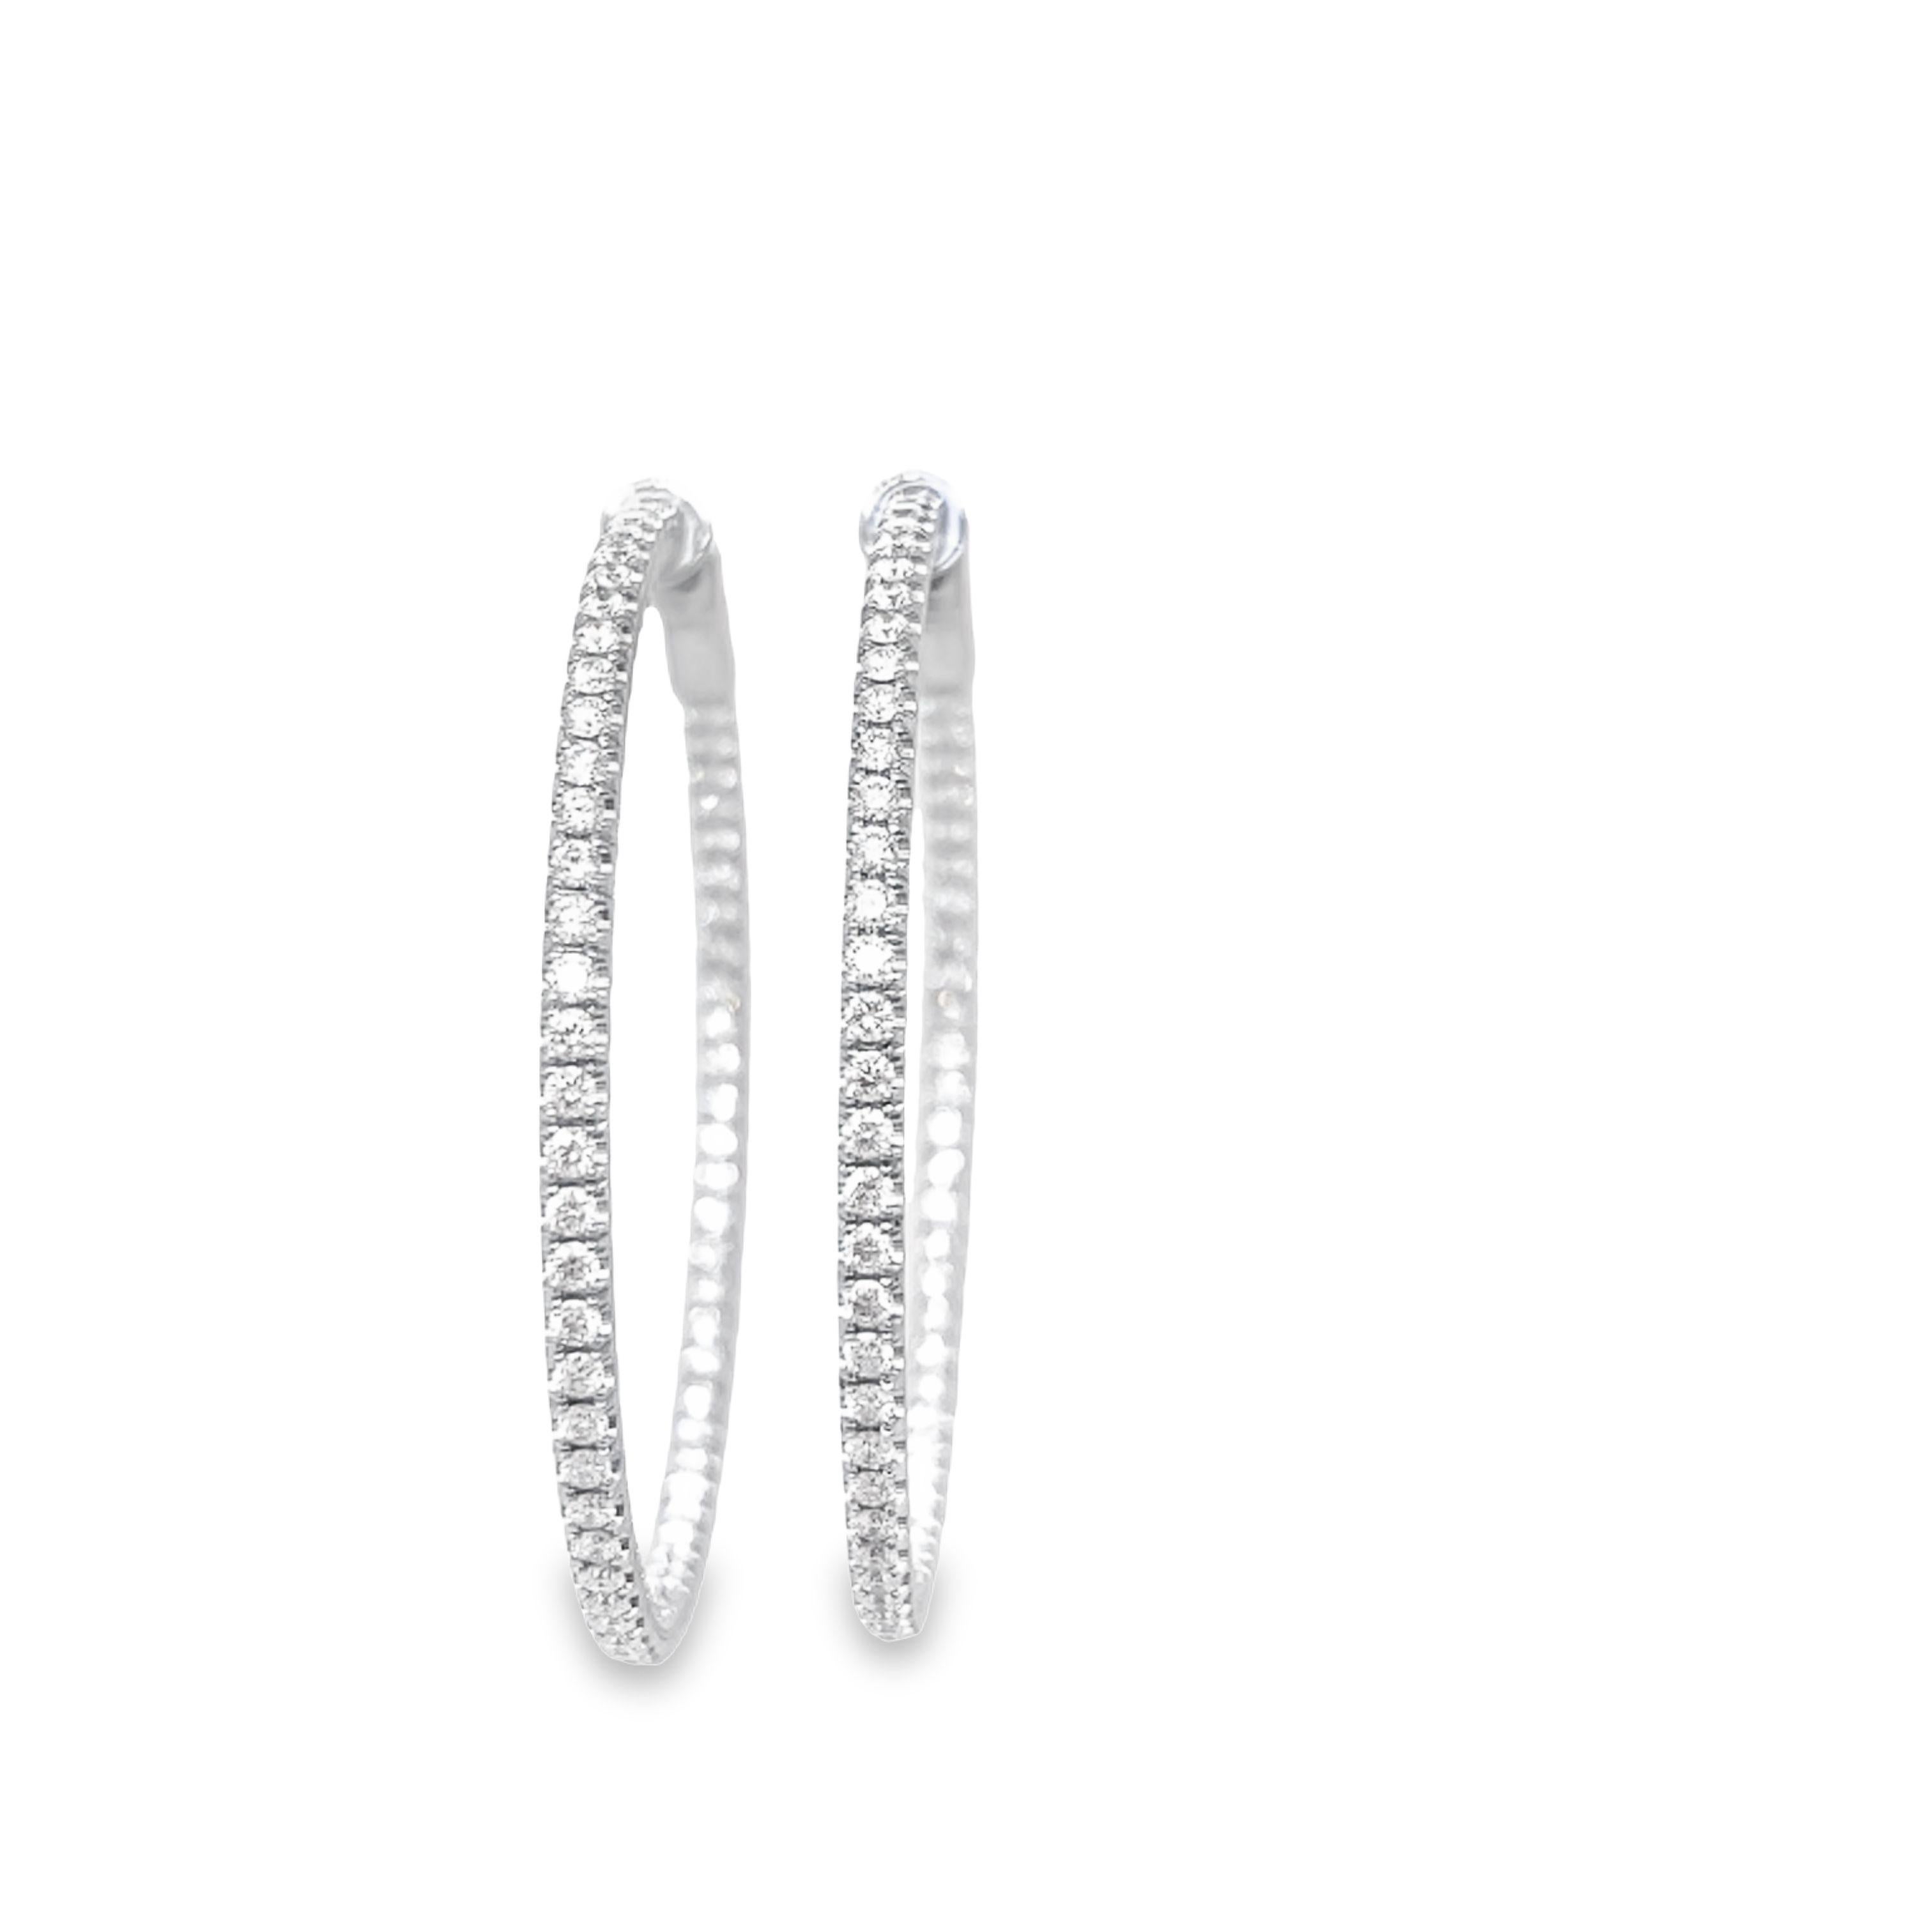 Modernist Gems Are Forever 5 carat Diamond Inside-Out Hoop Earrings in 18k Gold For Sale